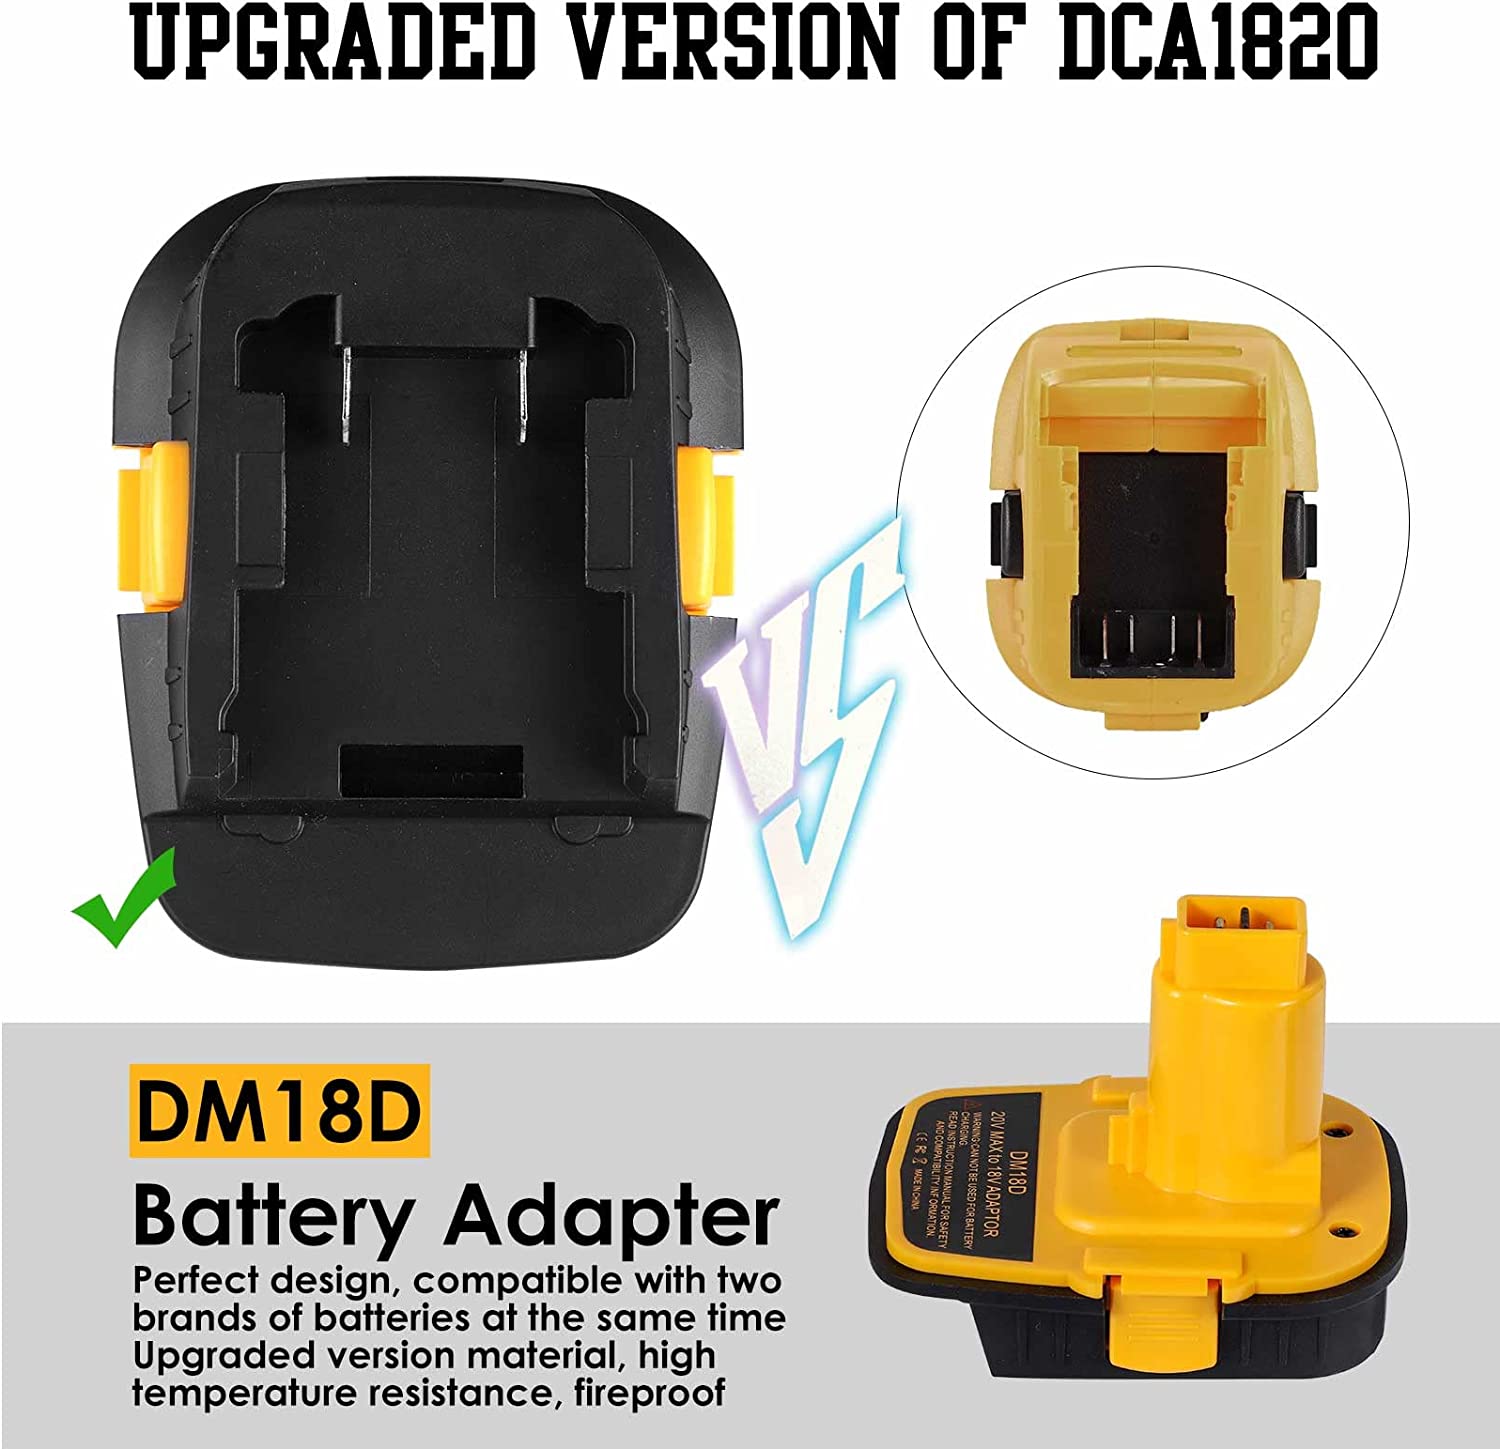 Adapter baterii DM18D z portem USB